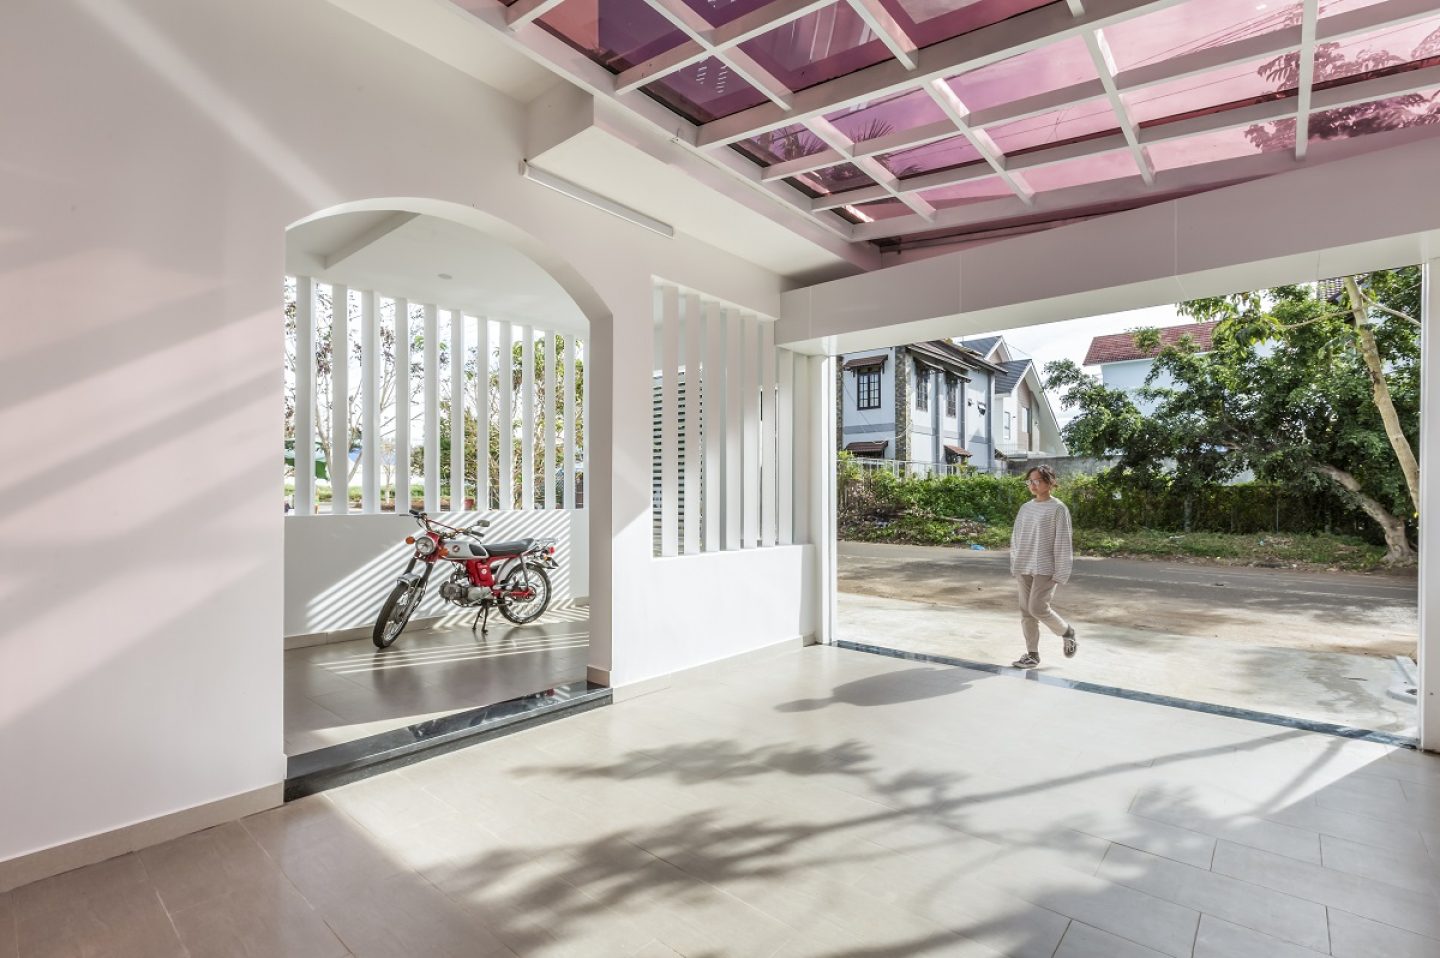 Nostal House - Lưu giữ "hồn" Tây Nguyên | Kaa Architects